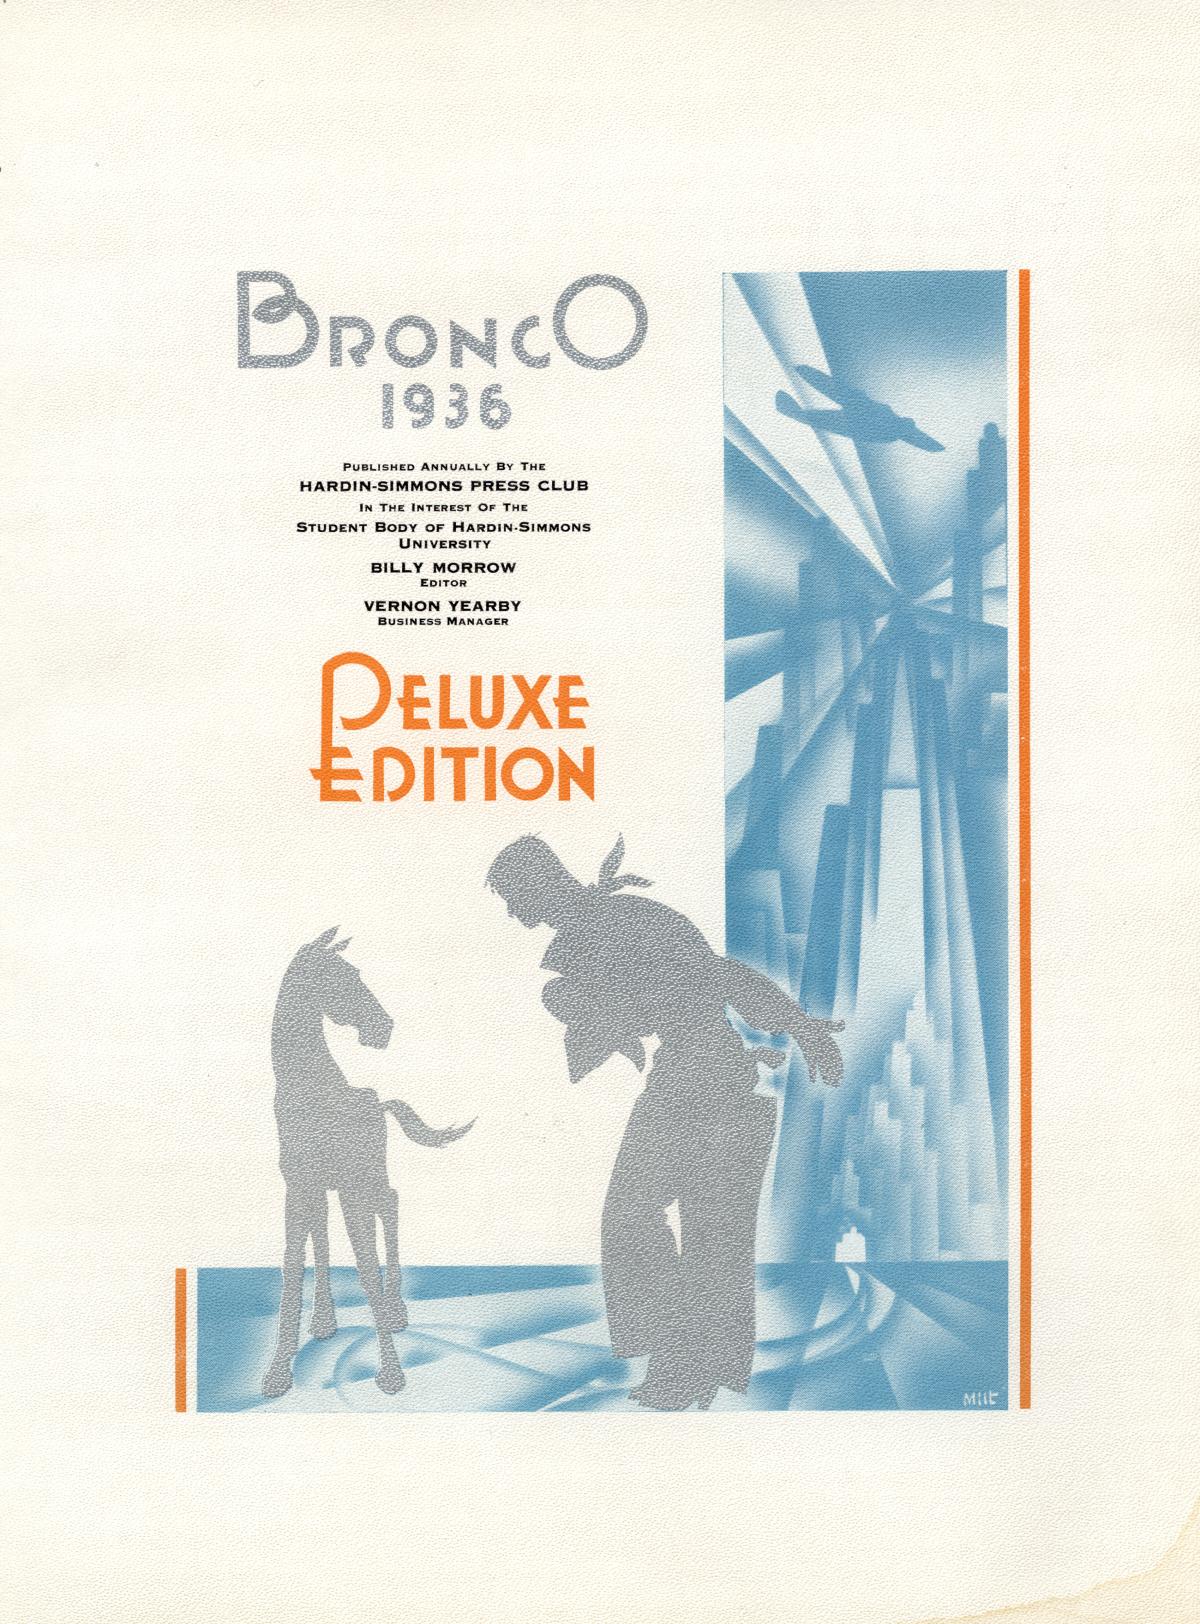 The Bronco, Yearbook of Hardin-Simmons University, 1936
                                                
                                                    4
                                                